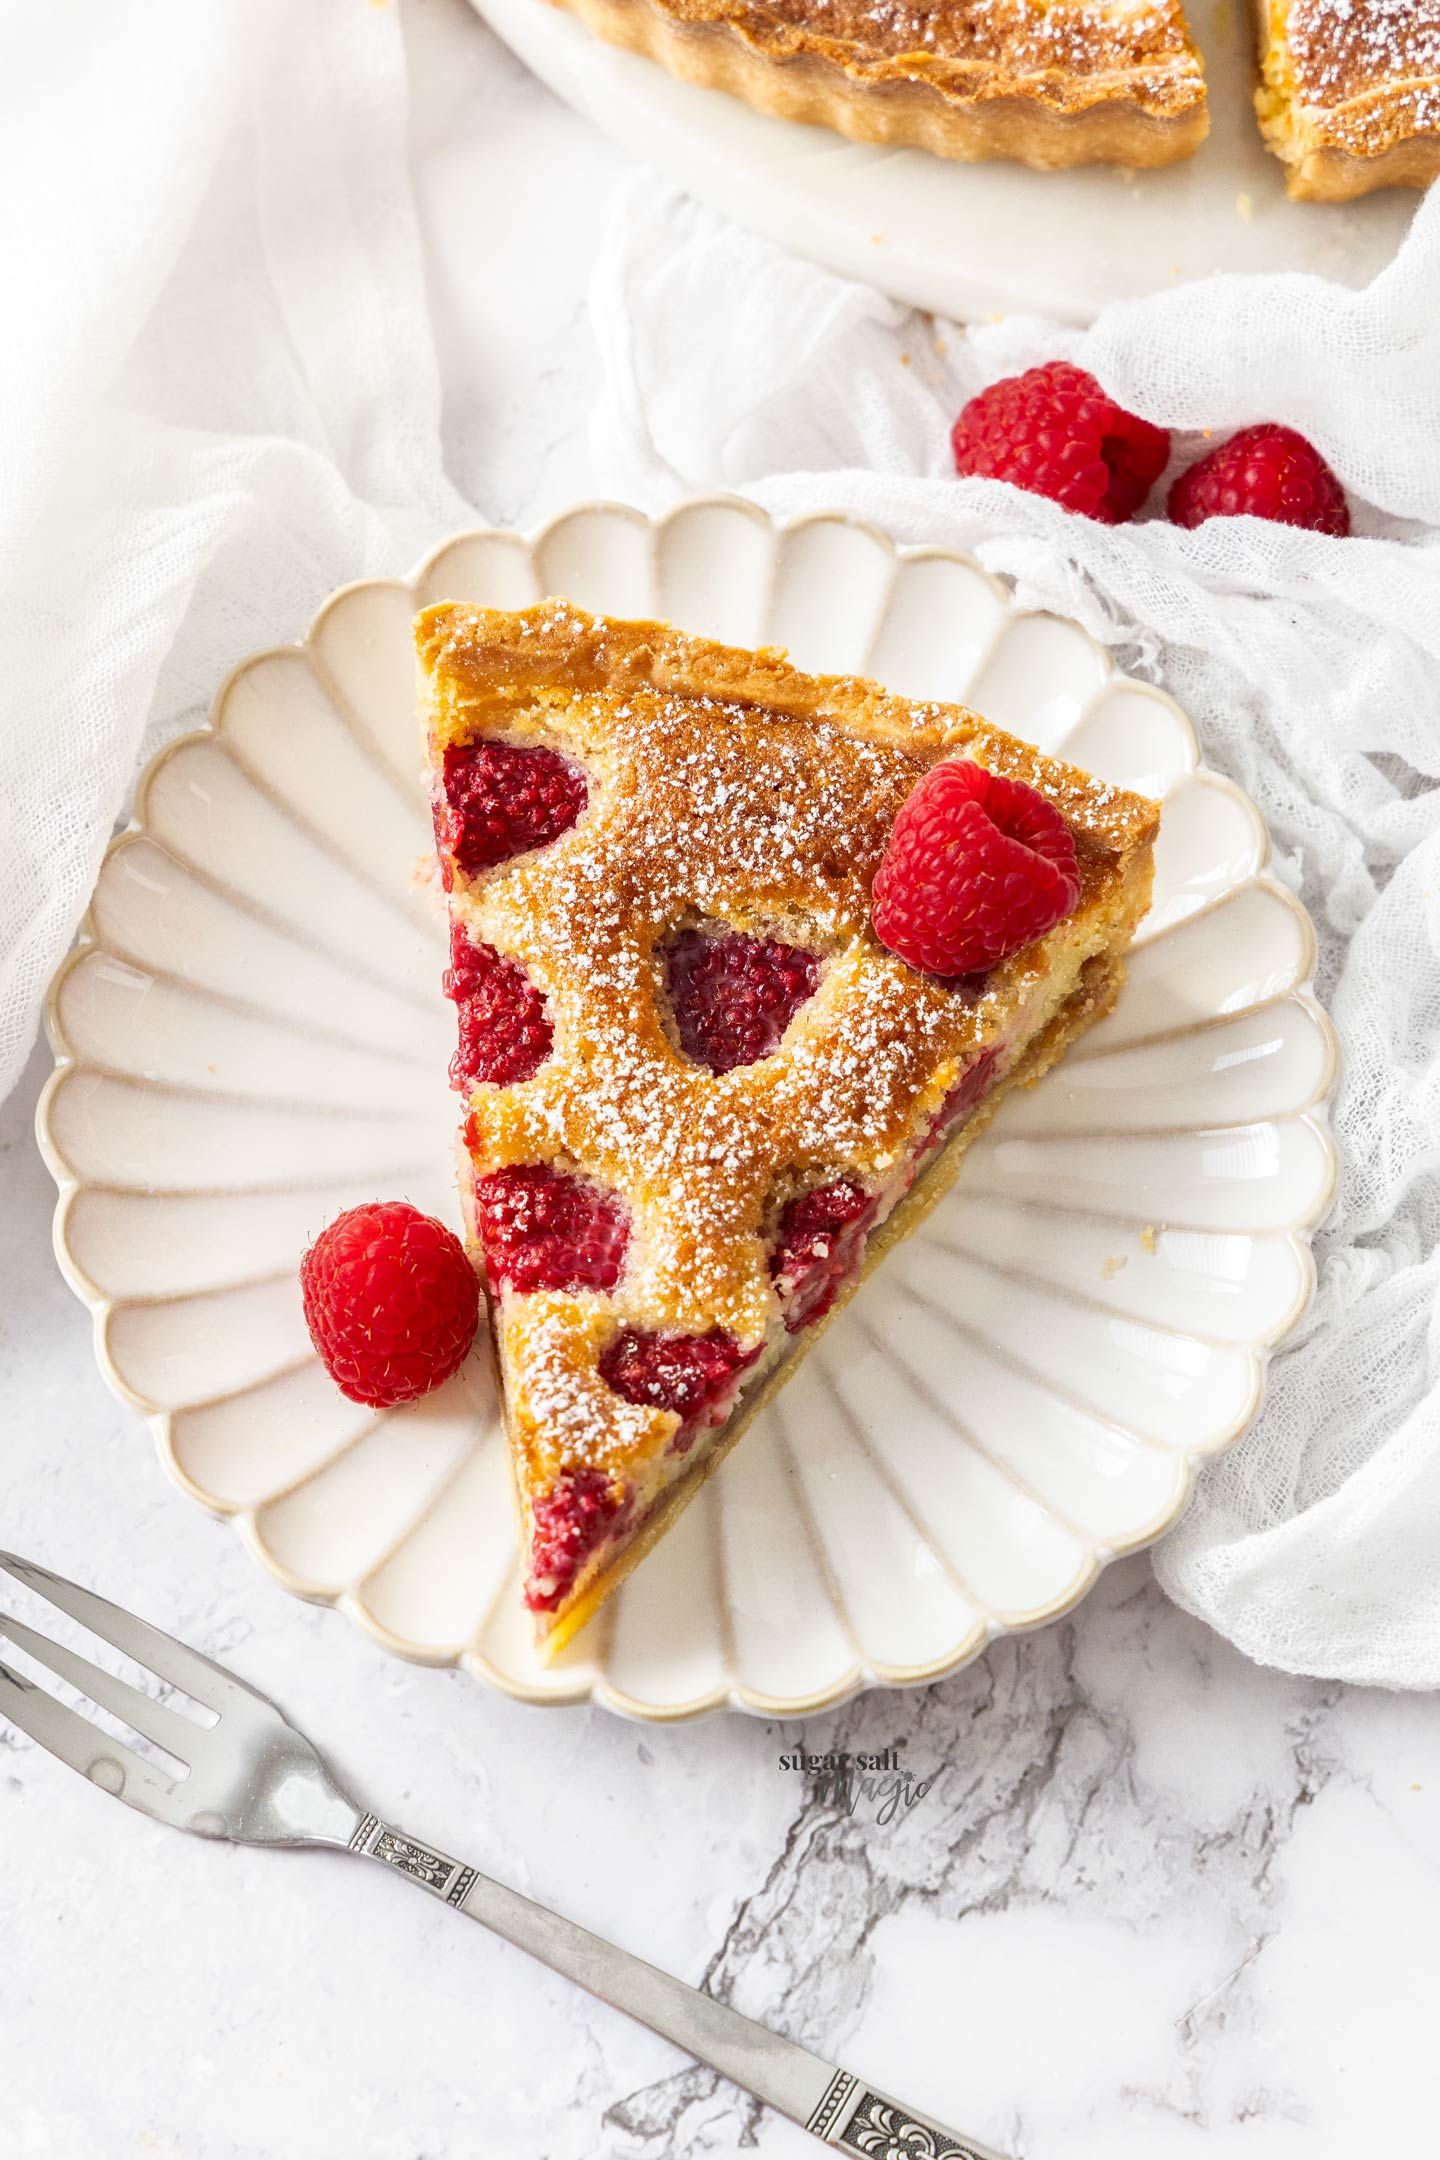 A slice of Raspberry frangipane tart on a dessert plate.